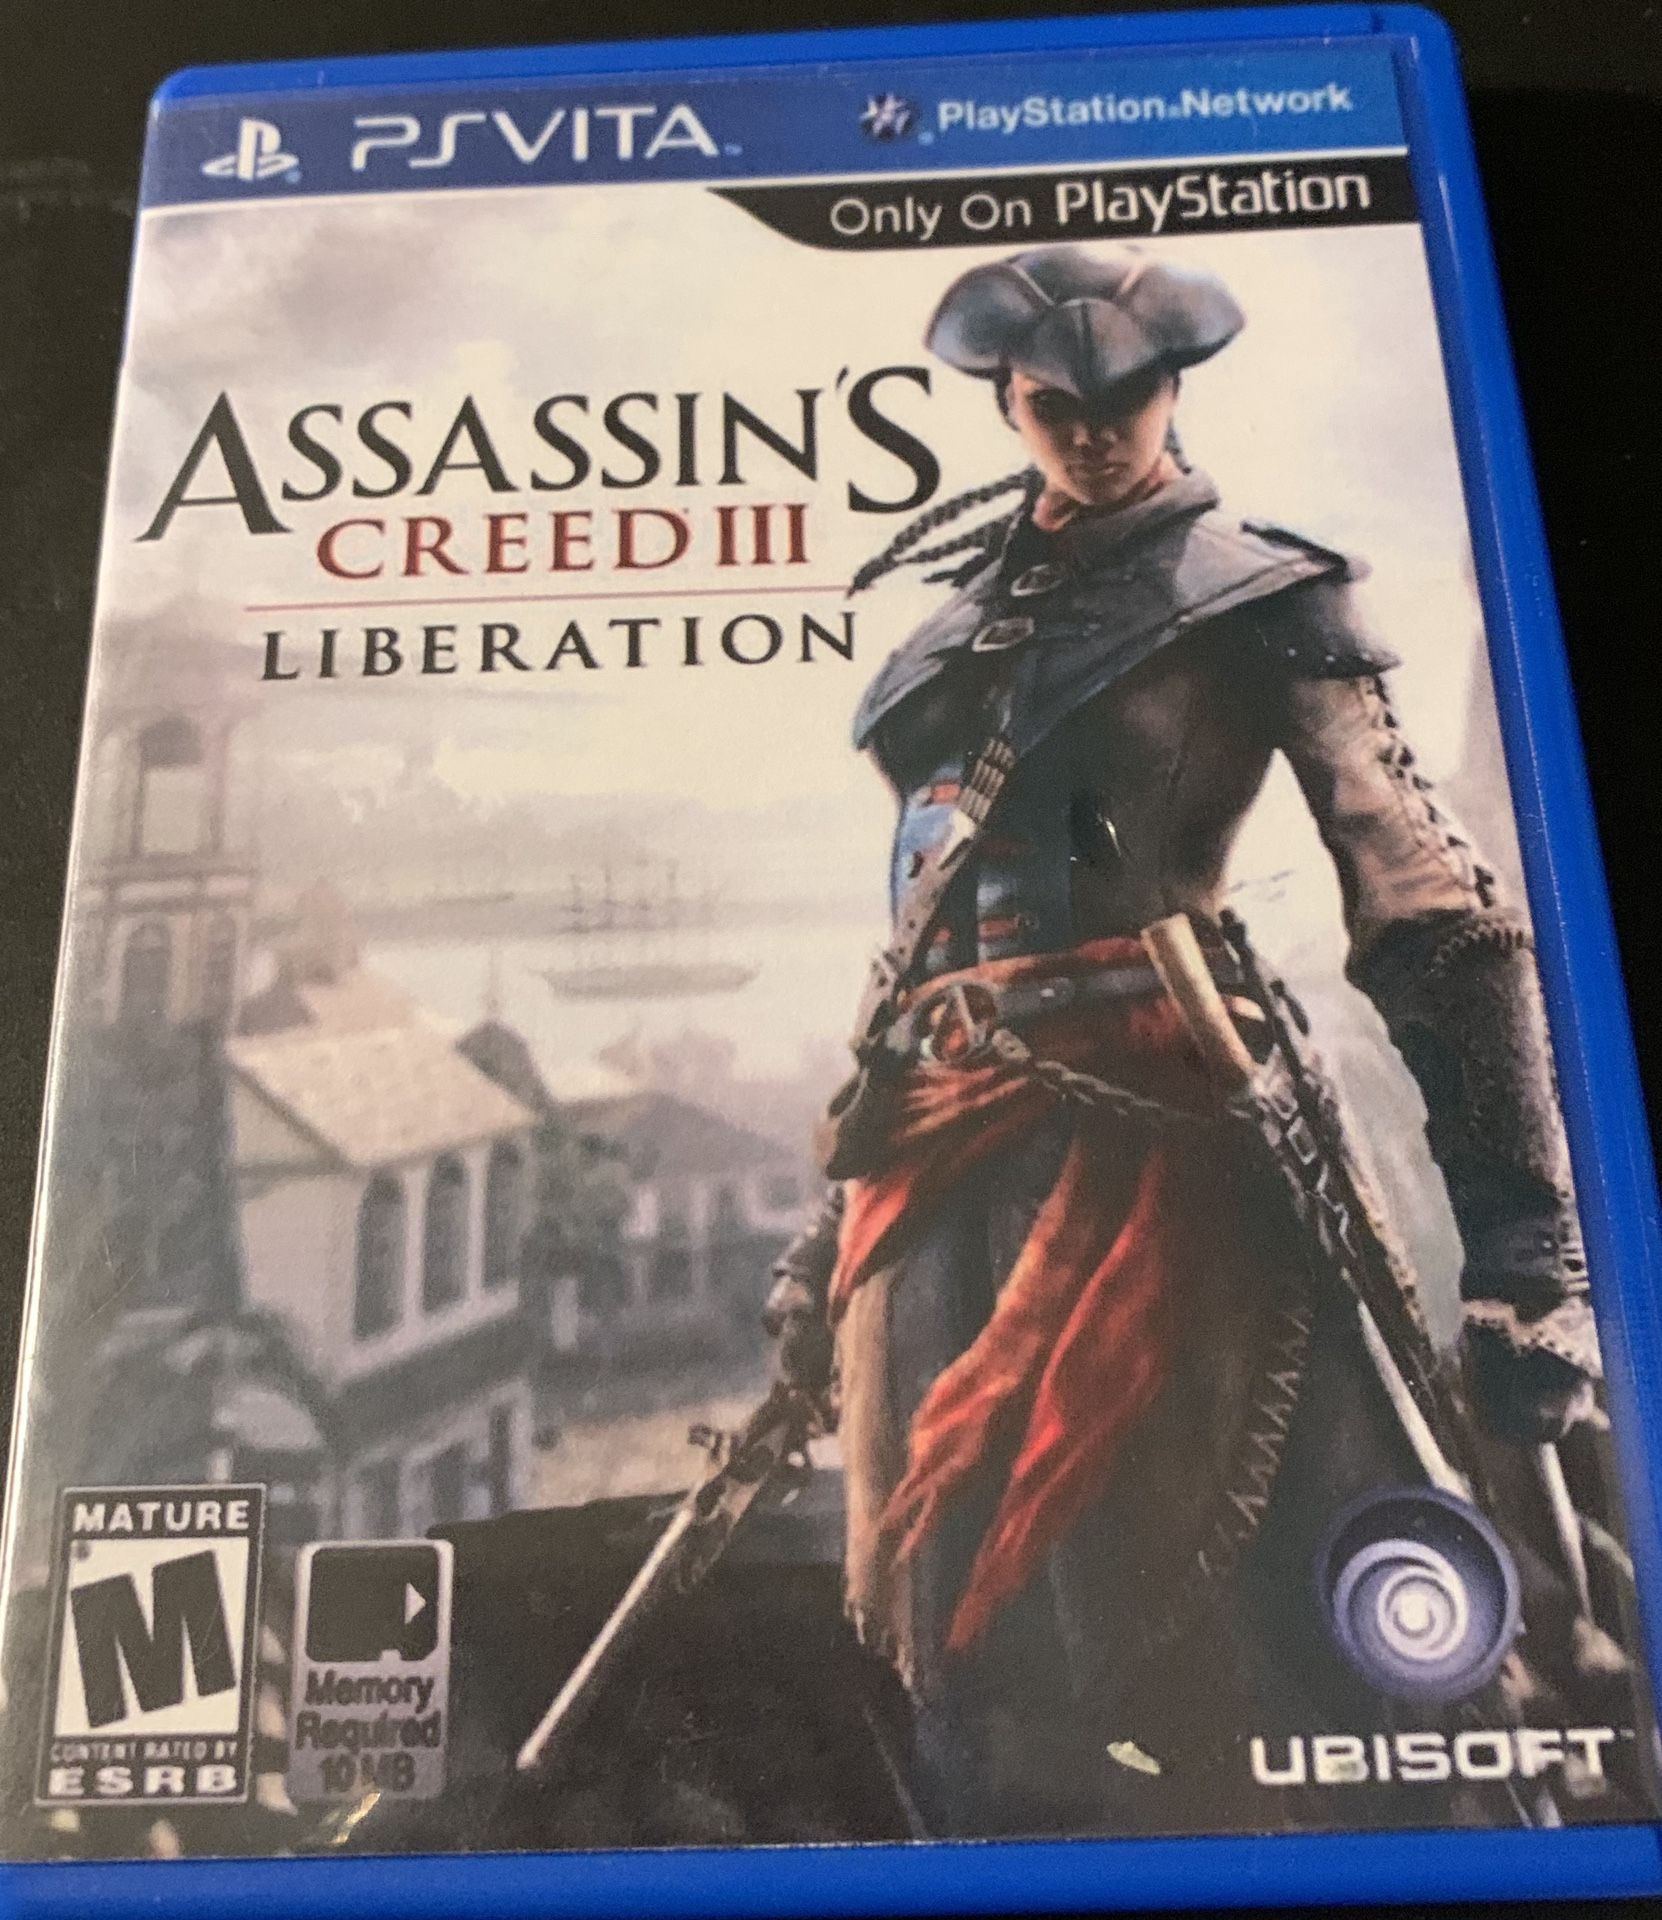 Ps vita game Assassins creed 3 liberation for